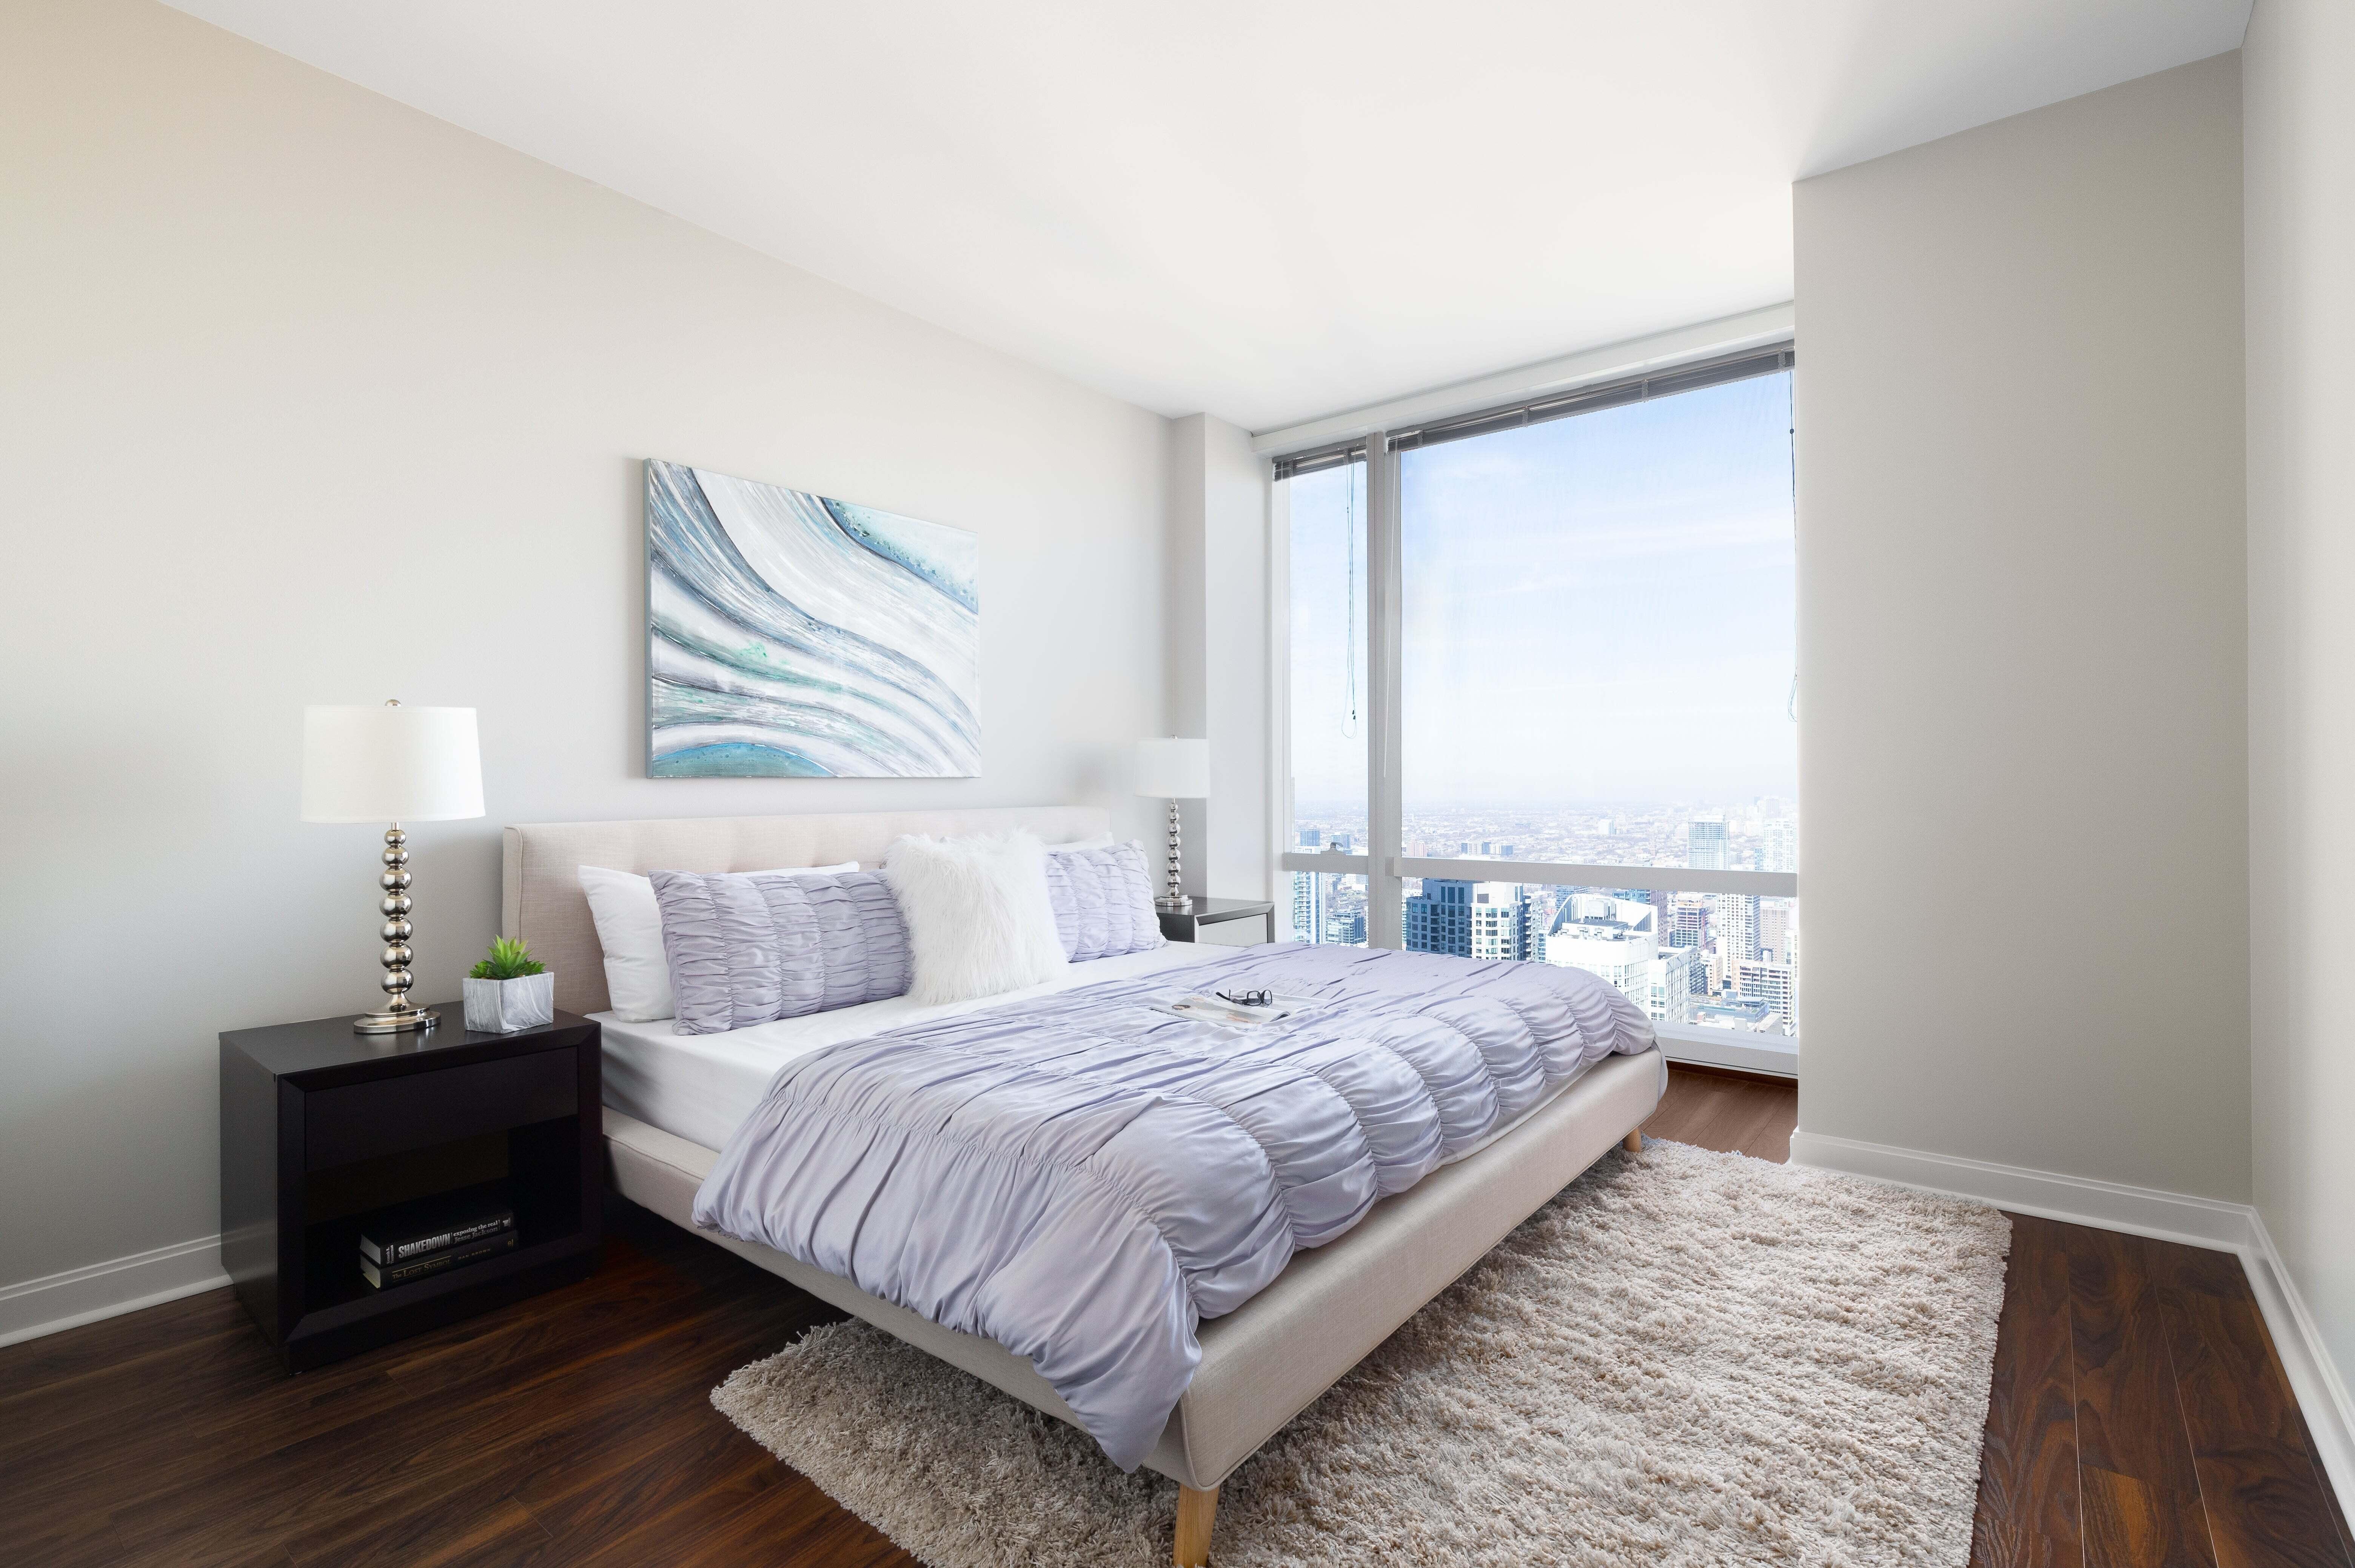 Average One Bedroom Apartment Rent in 10 U.S. Cities